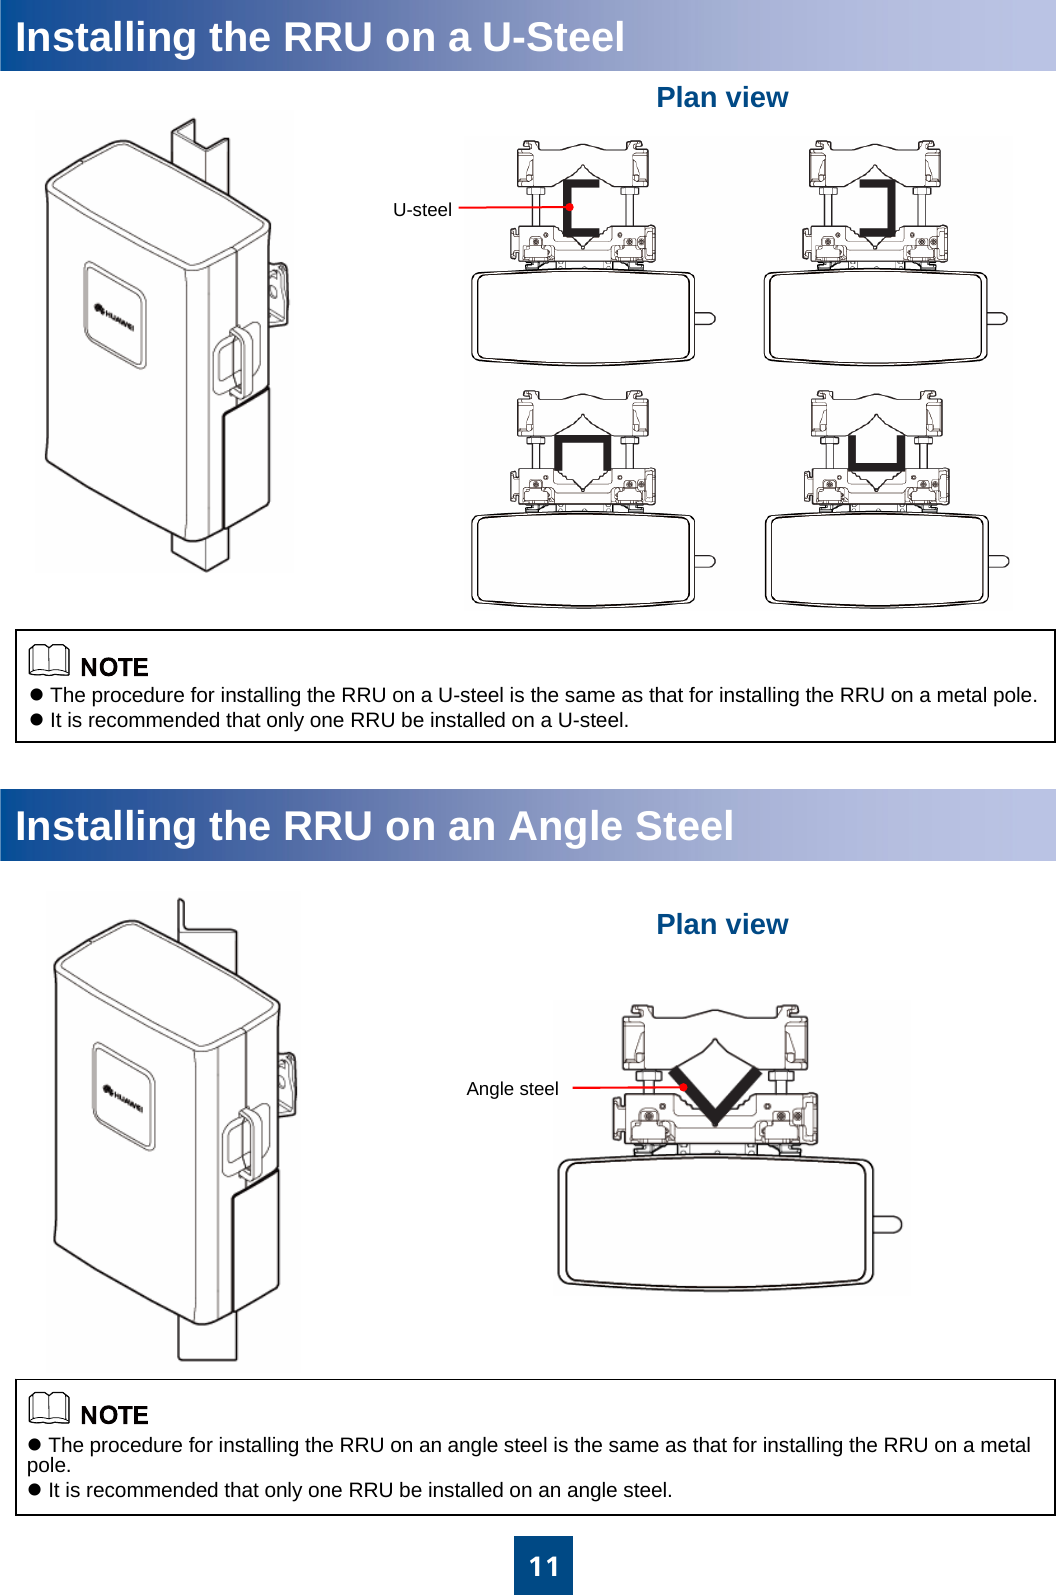 11U-steelInstalling the RRU on a U-SteelPlan viewPlan viewAngle steelzThe procedure for installing the RRU on a U-steel is the same as that for installing the RRU on a metal pole.zIt is recommended that only one RRU be installed on a U-steel.zThe procedure for installing the RRU on an angle steel is the same as that for installing the RRU on a metal pole.zIt is recommended that only one RRU be installed on an angle steel.Installing the RRU on an Angle Steel